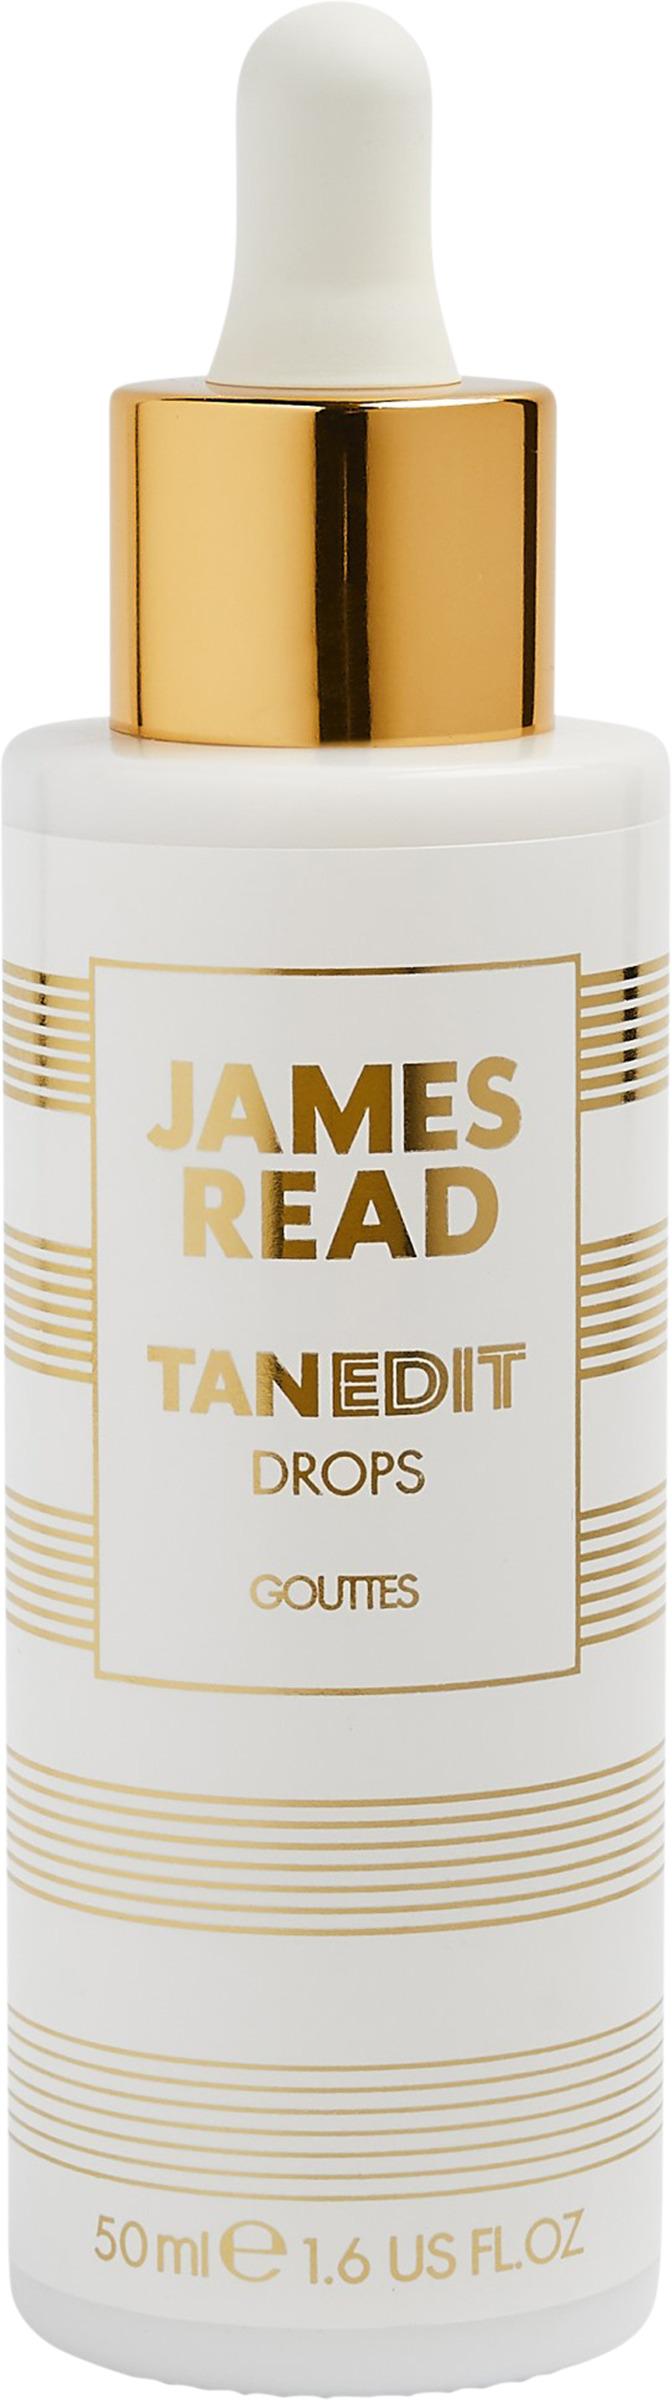 James Read TanEdit Drops 50ml